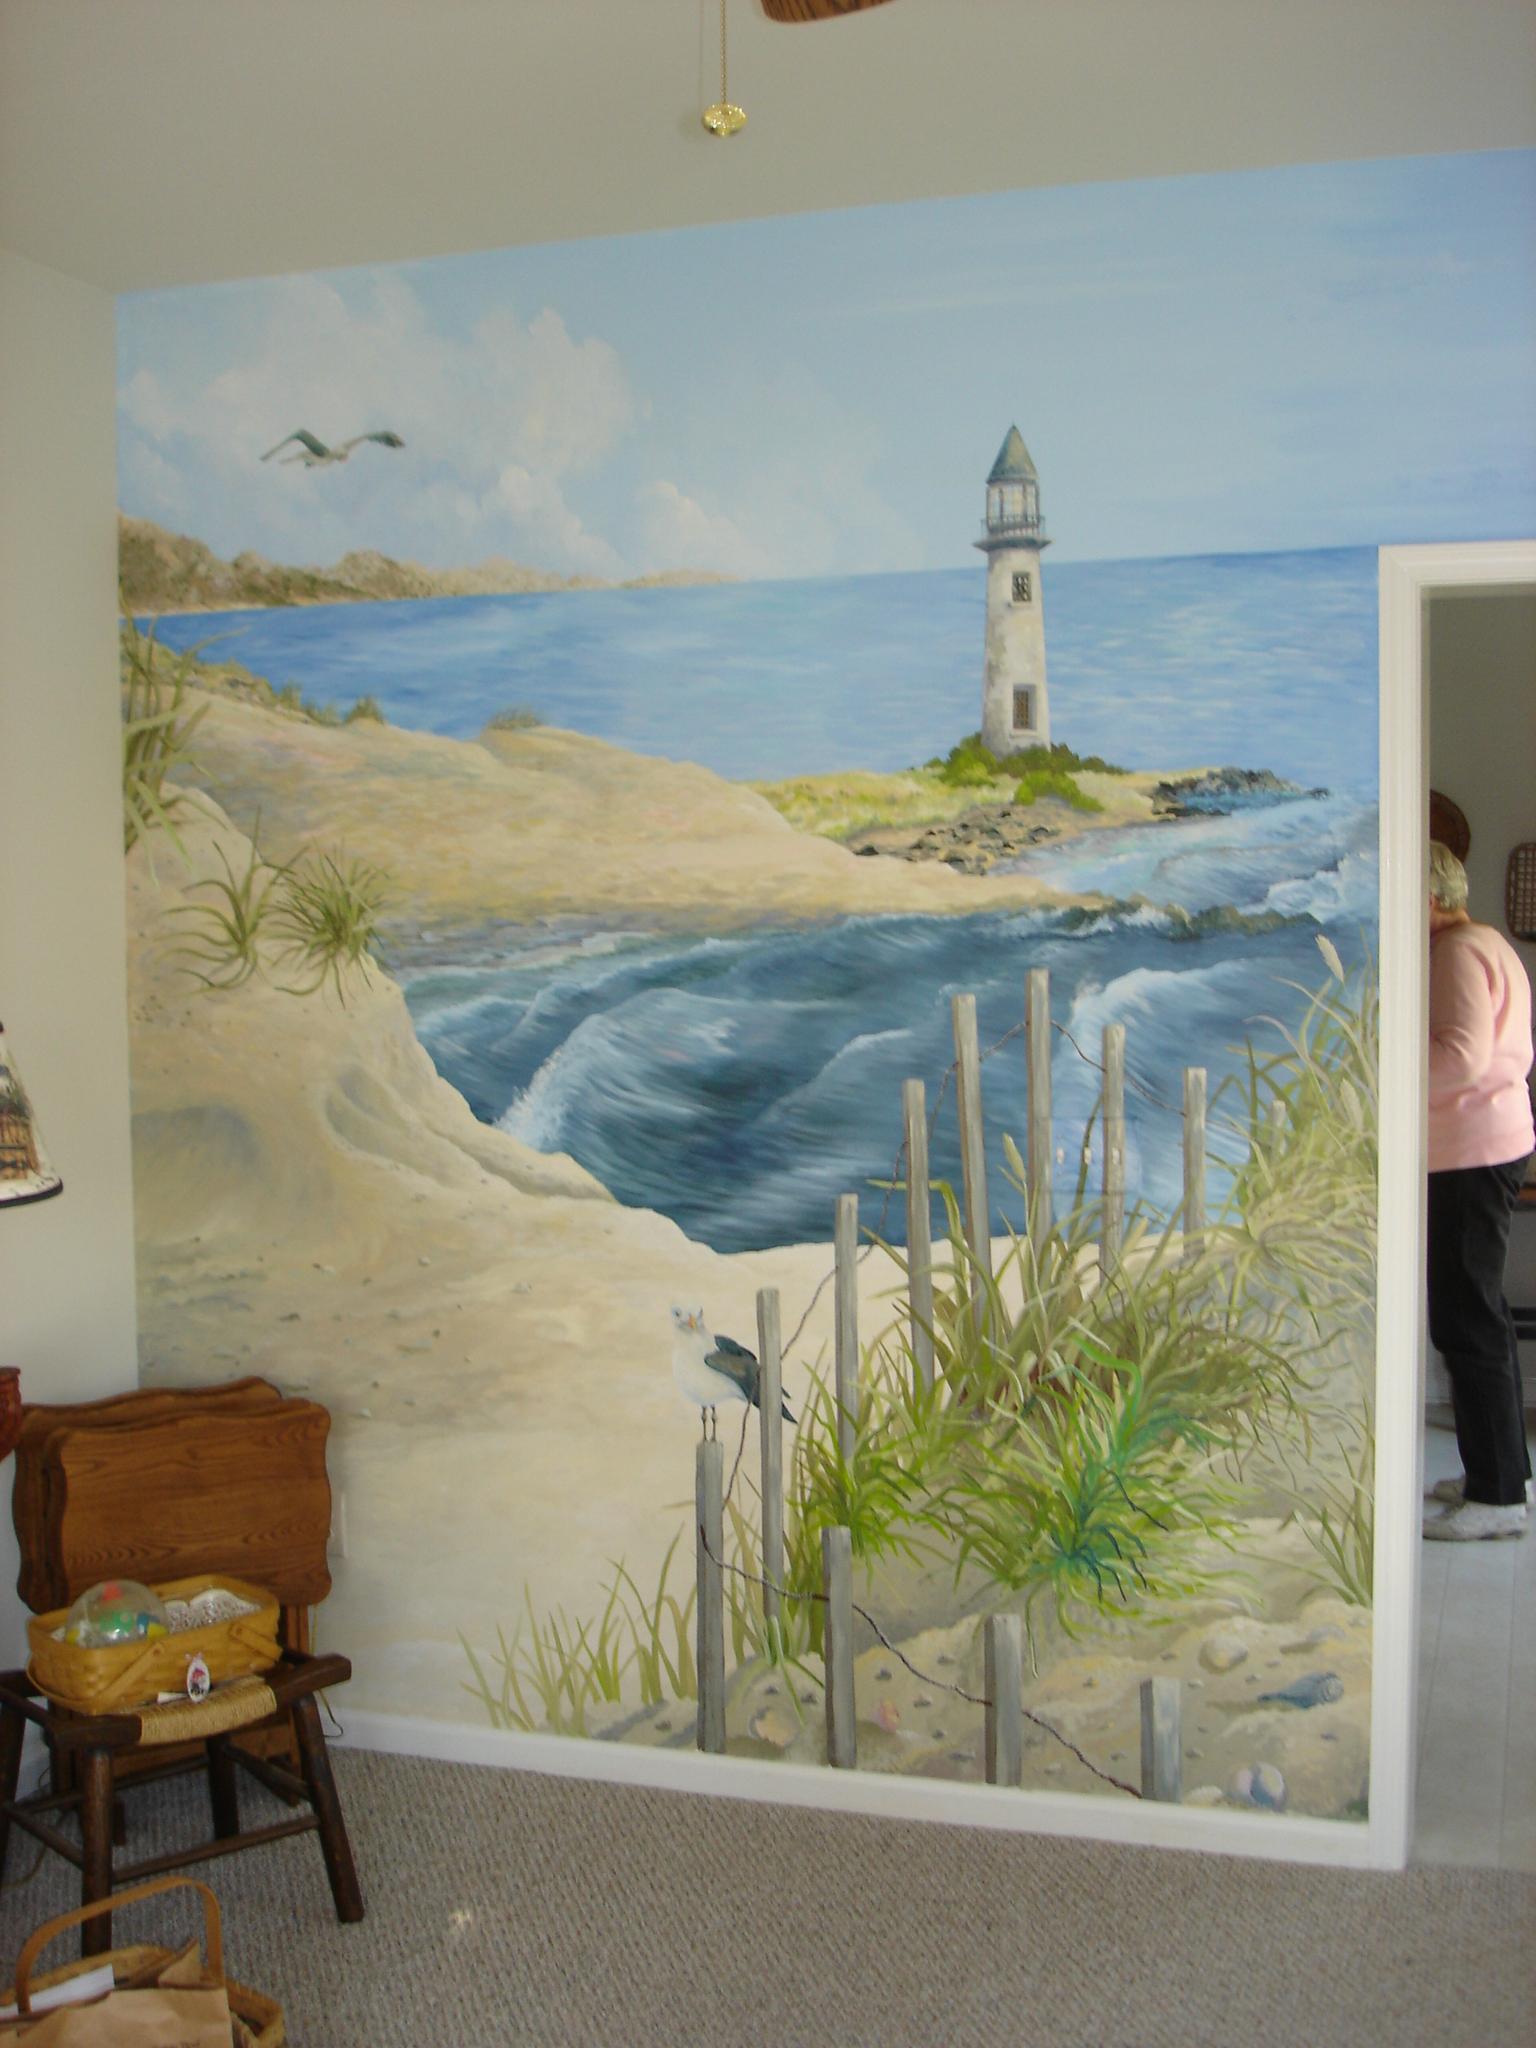 Mural of Lighthouse